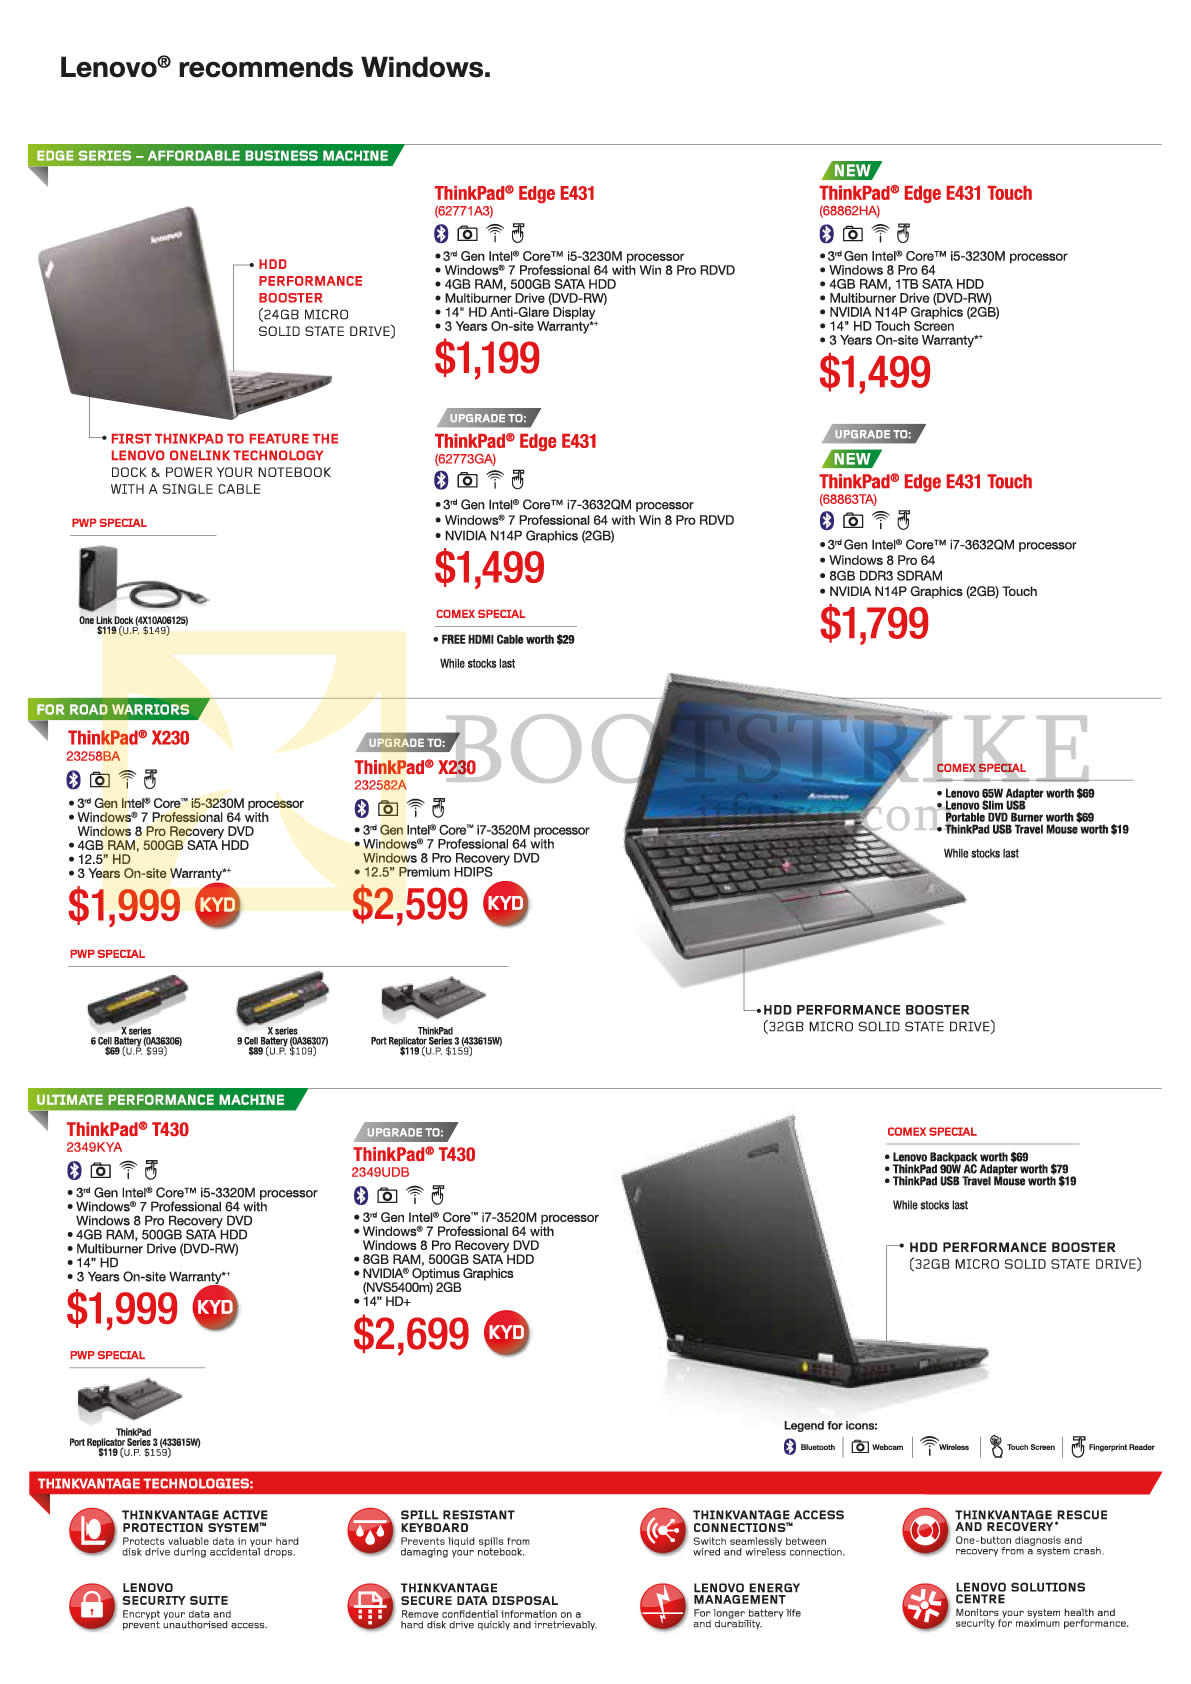 COMEX 2013 price list image brochure of Lenovo Notebooks ThinkPad Edge E431, Touch, X230, T430